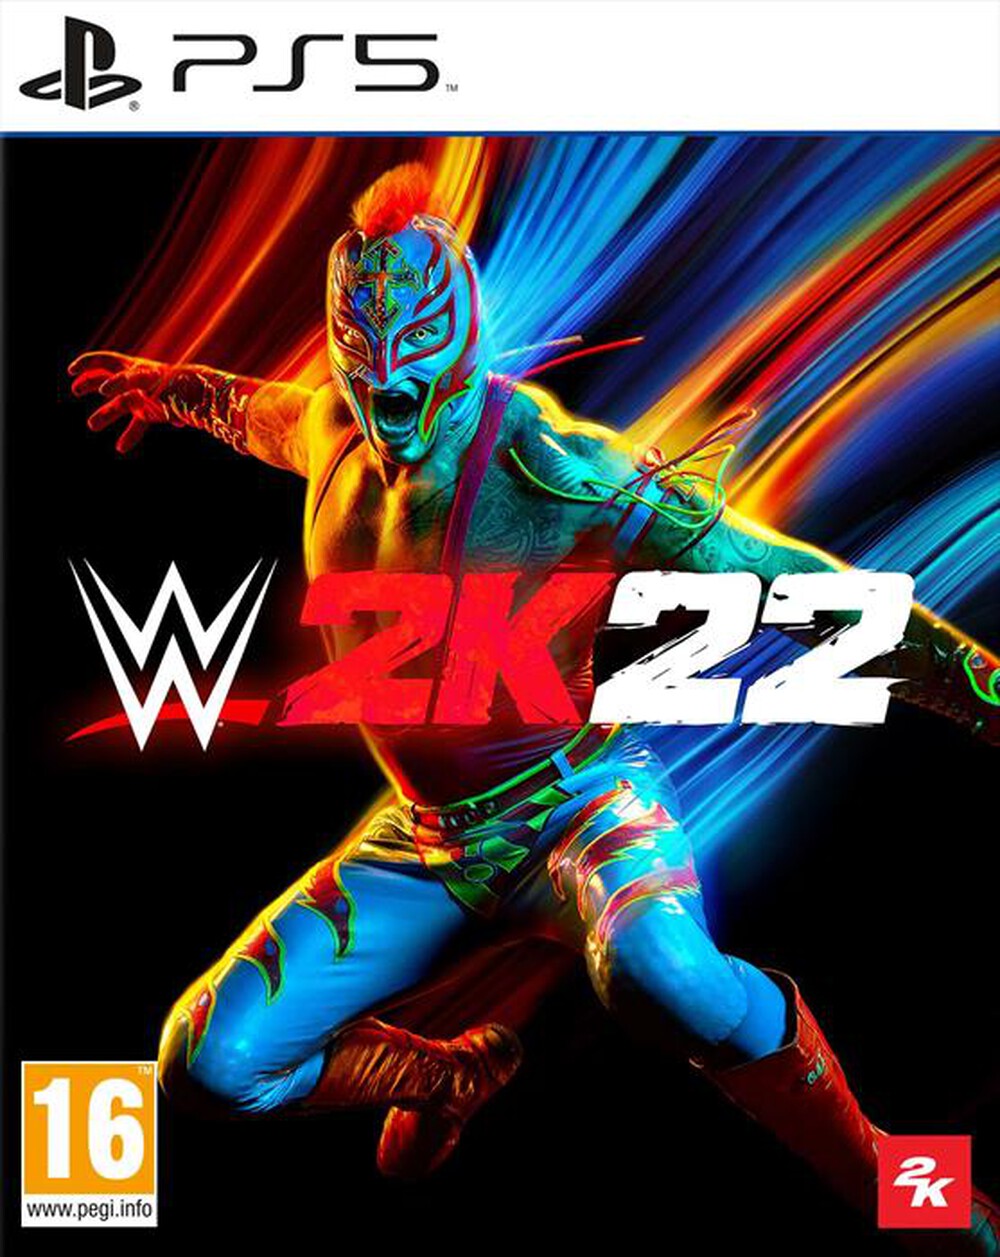 "2K GAMES - WWE 2K22 PS5"